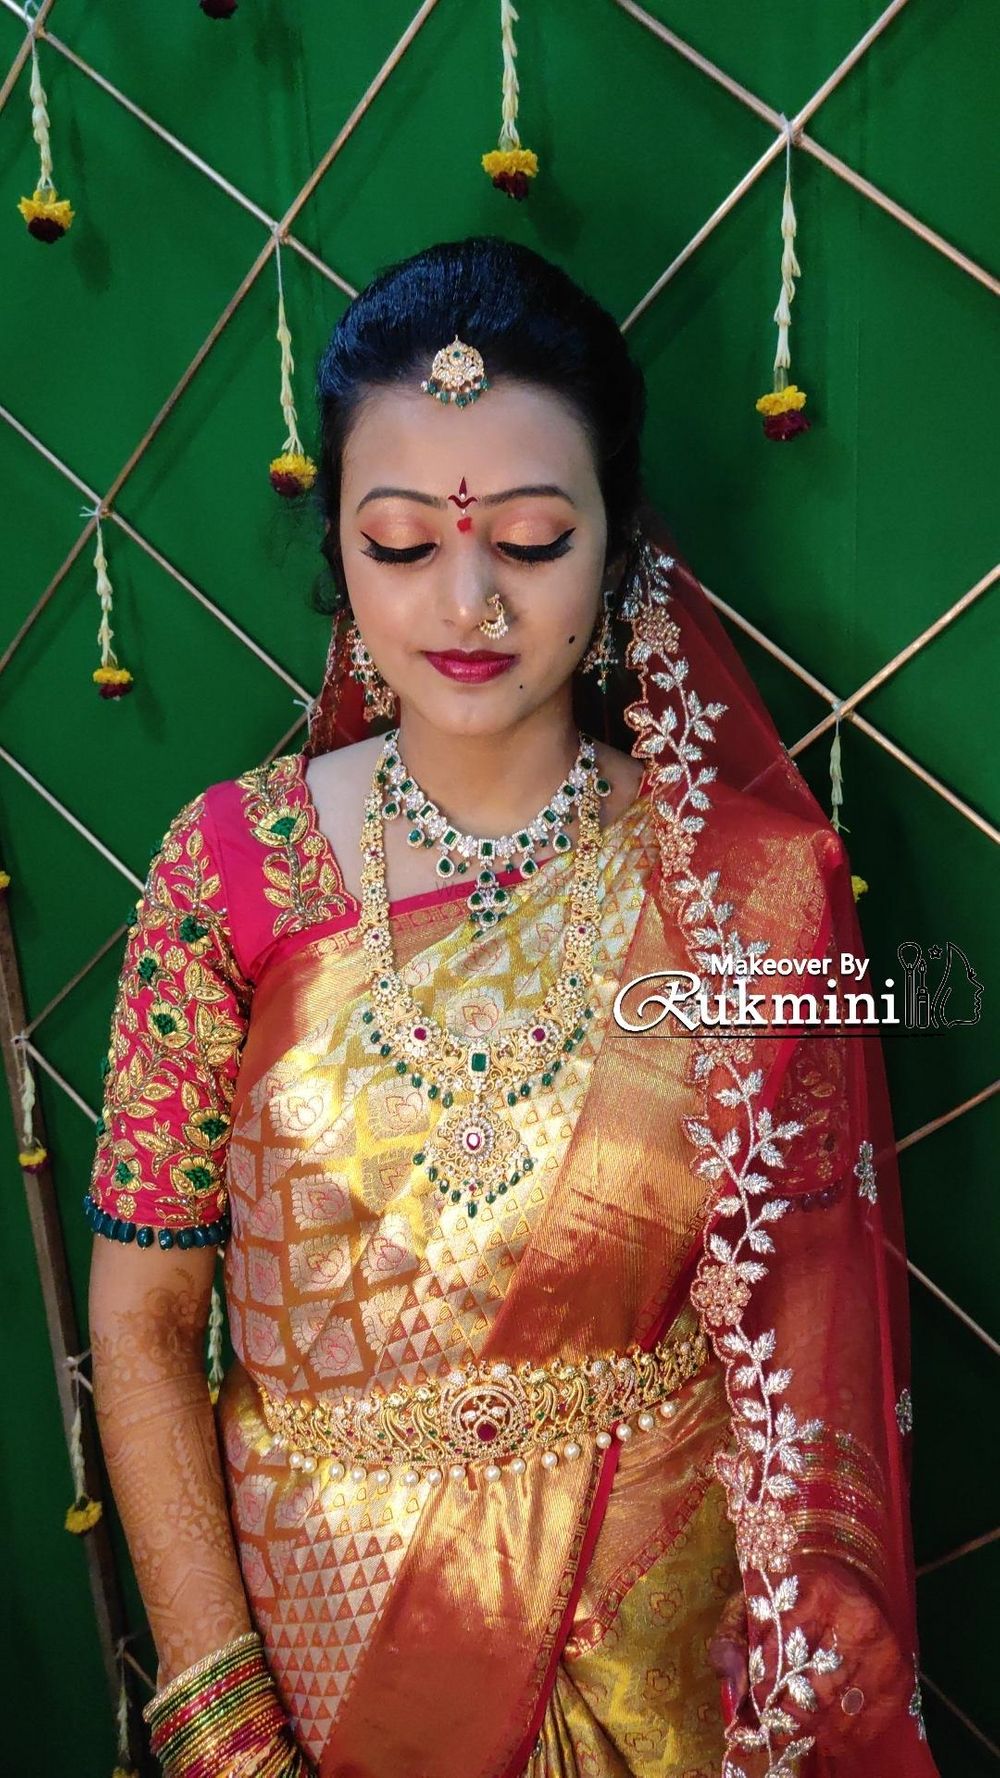 Photo By Makeover by Rukmini Kiran - Bridal Makeup